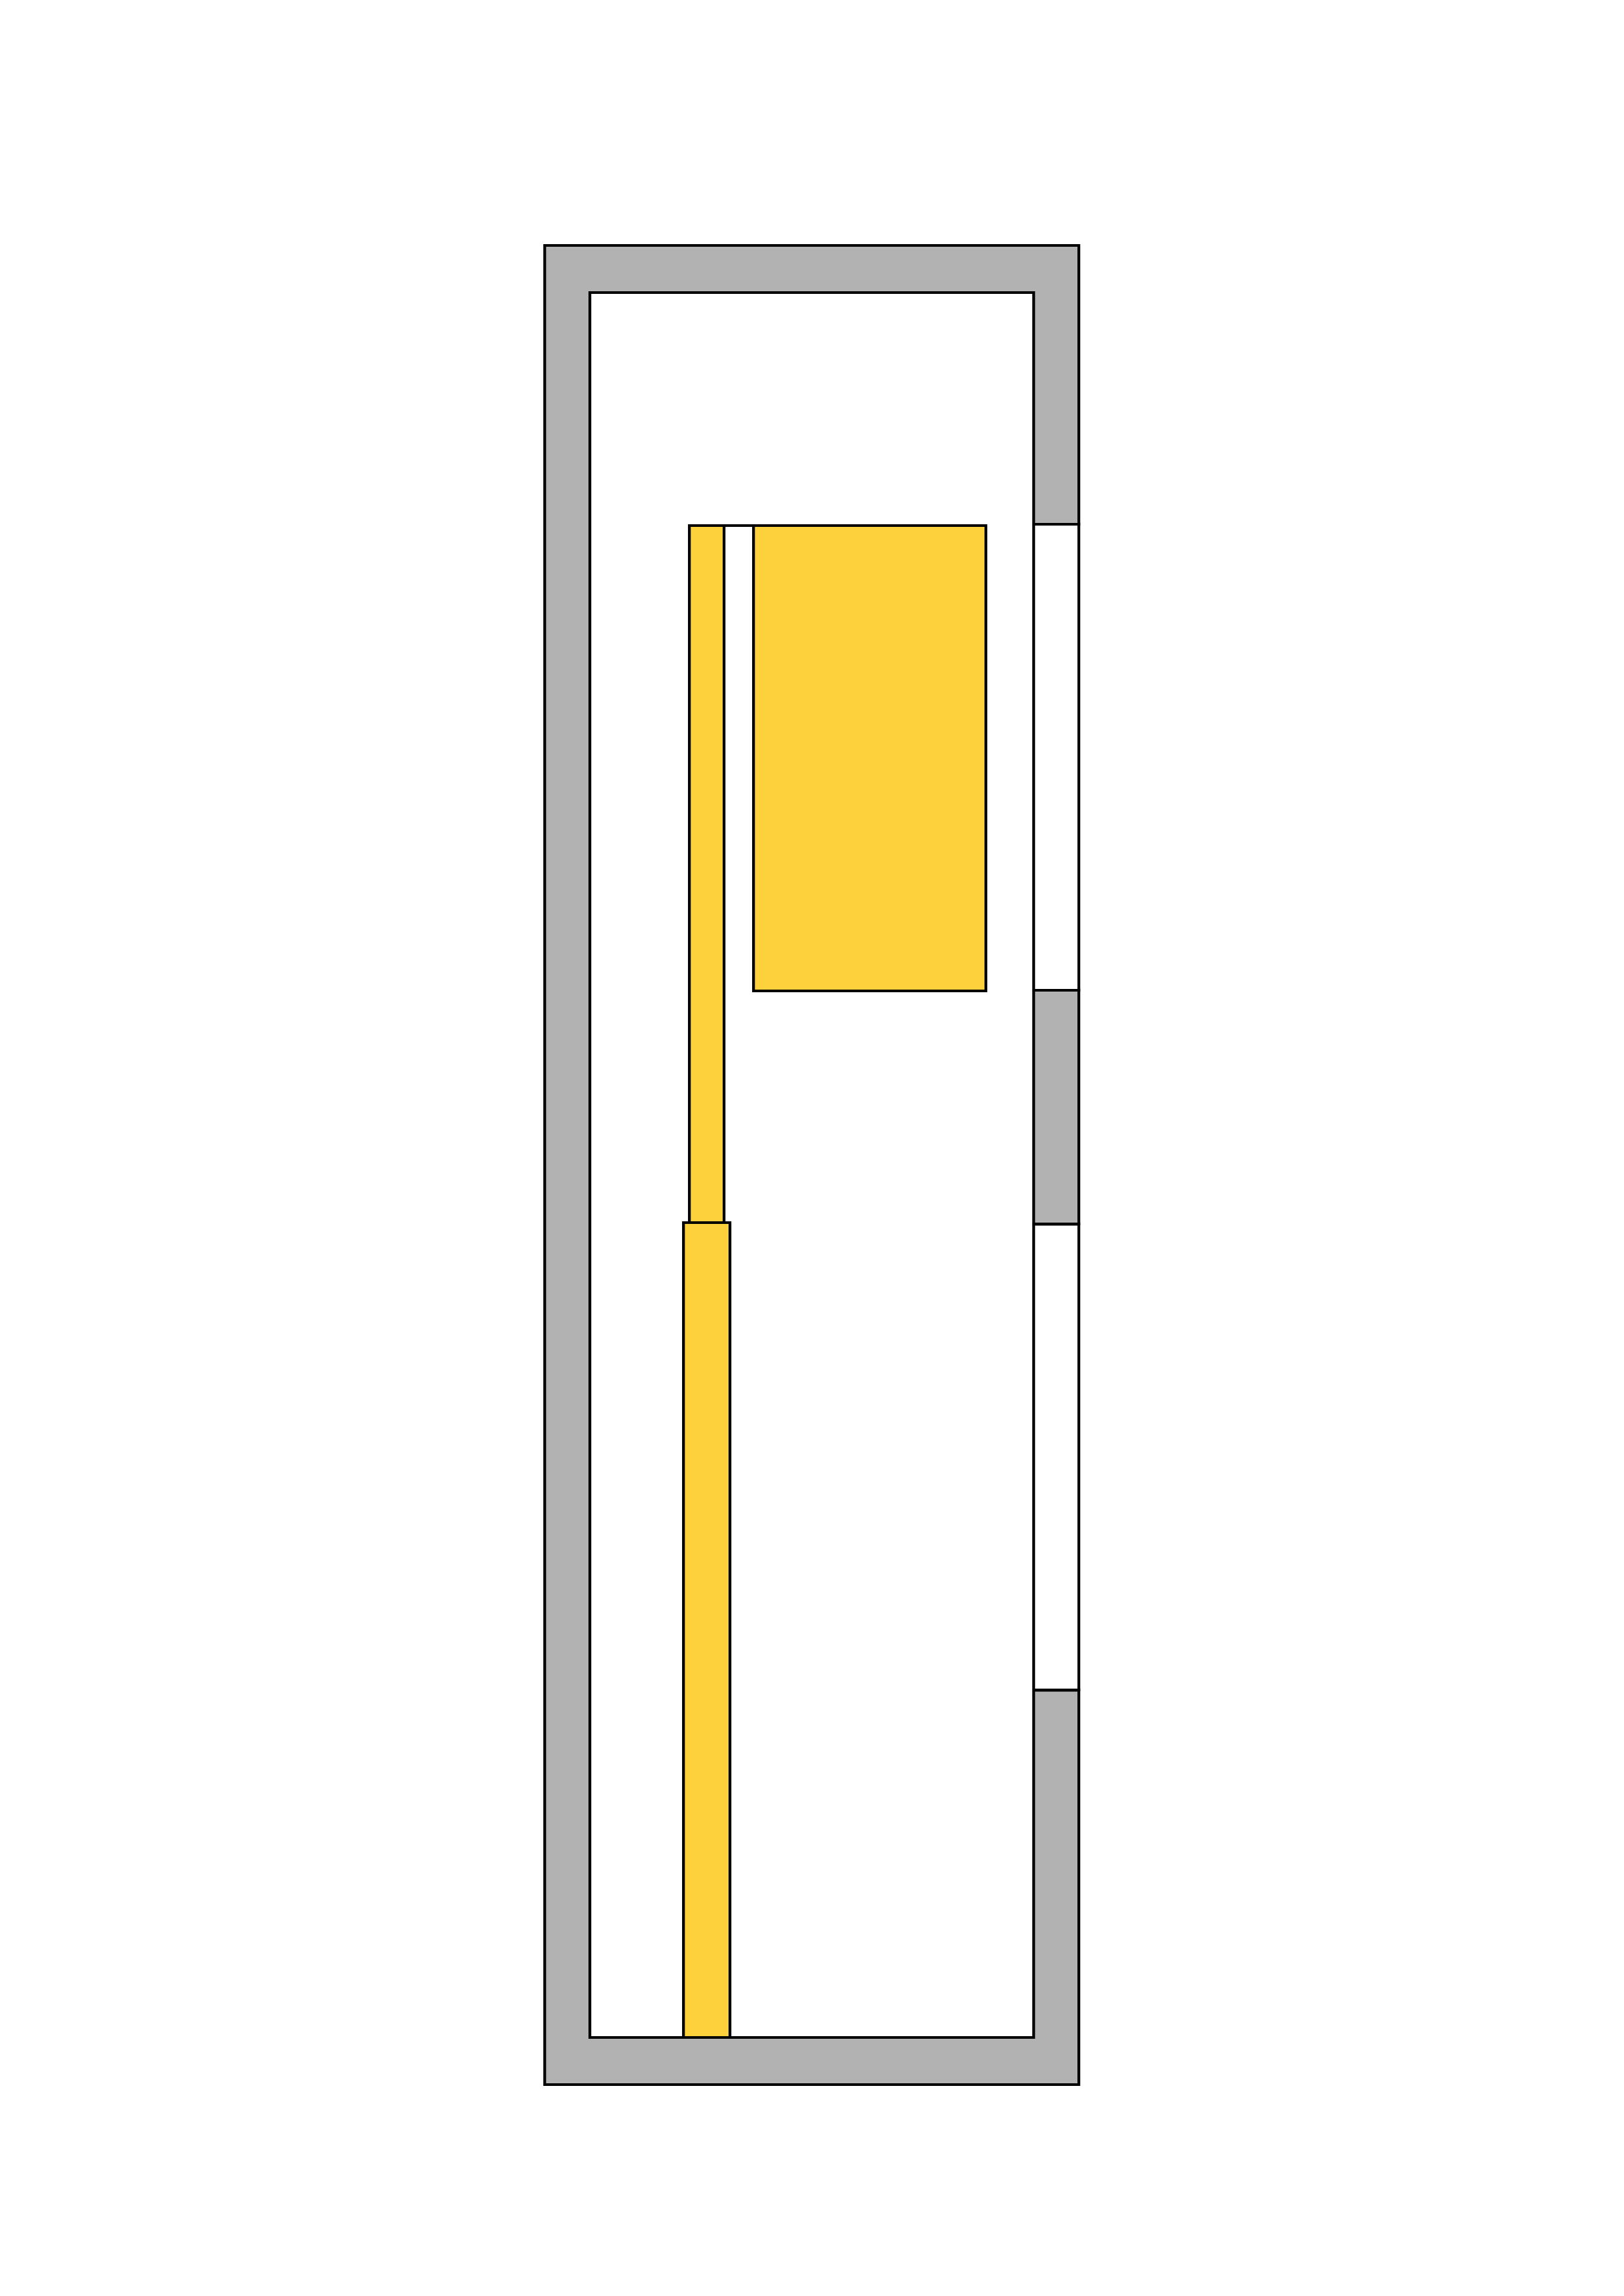 جک هیدرولیکی سفارشی ، آسانسور هیدرولیکی با جک کنار مستقیم ،جک تسلکوپی ، جک هیدرولیک دو طرفه